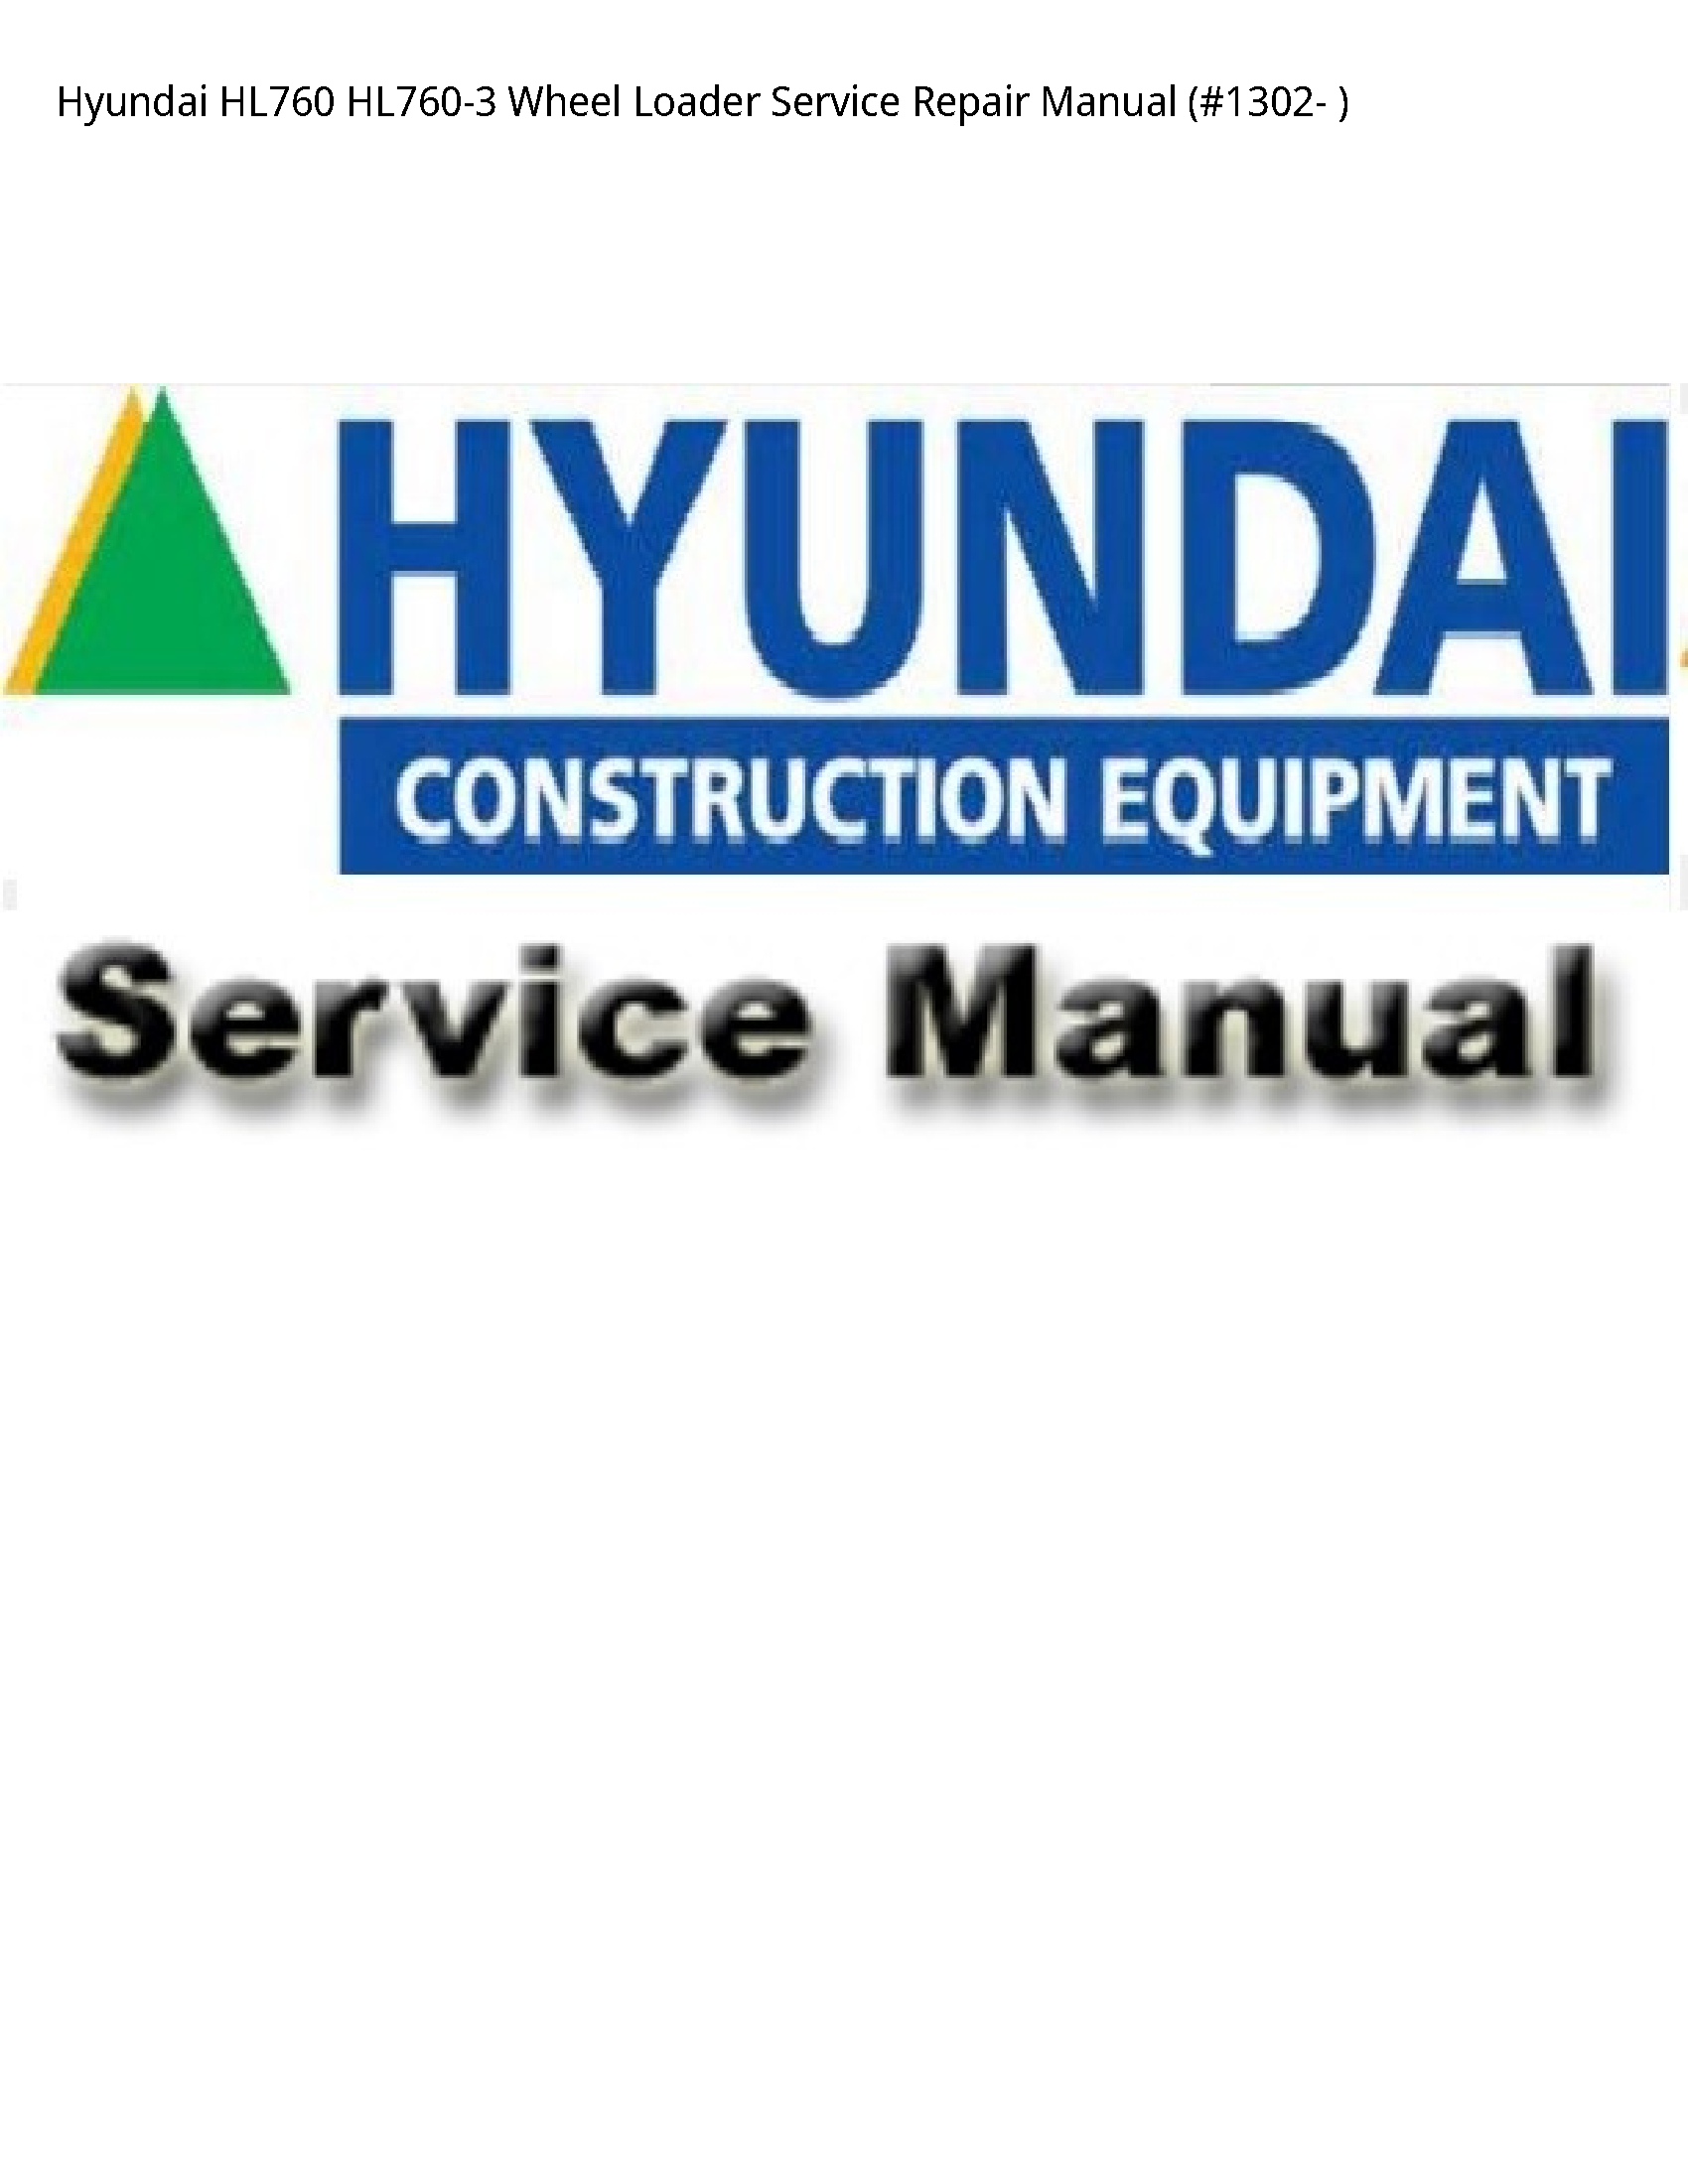 Hyundai HL760 Wheel Loader manual